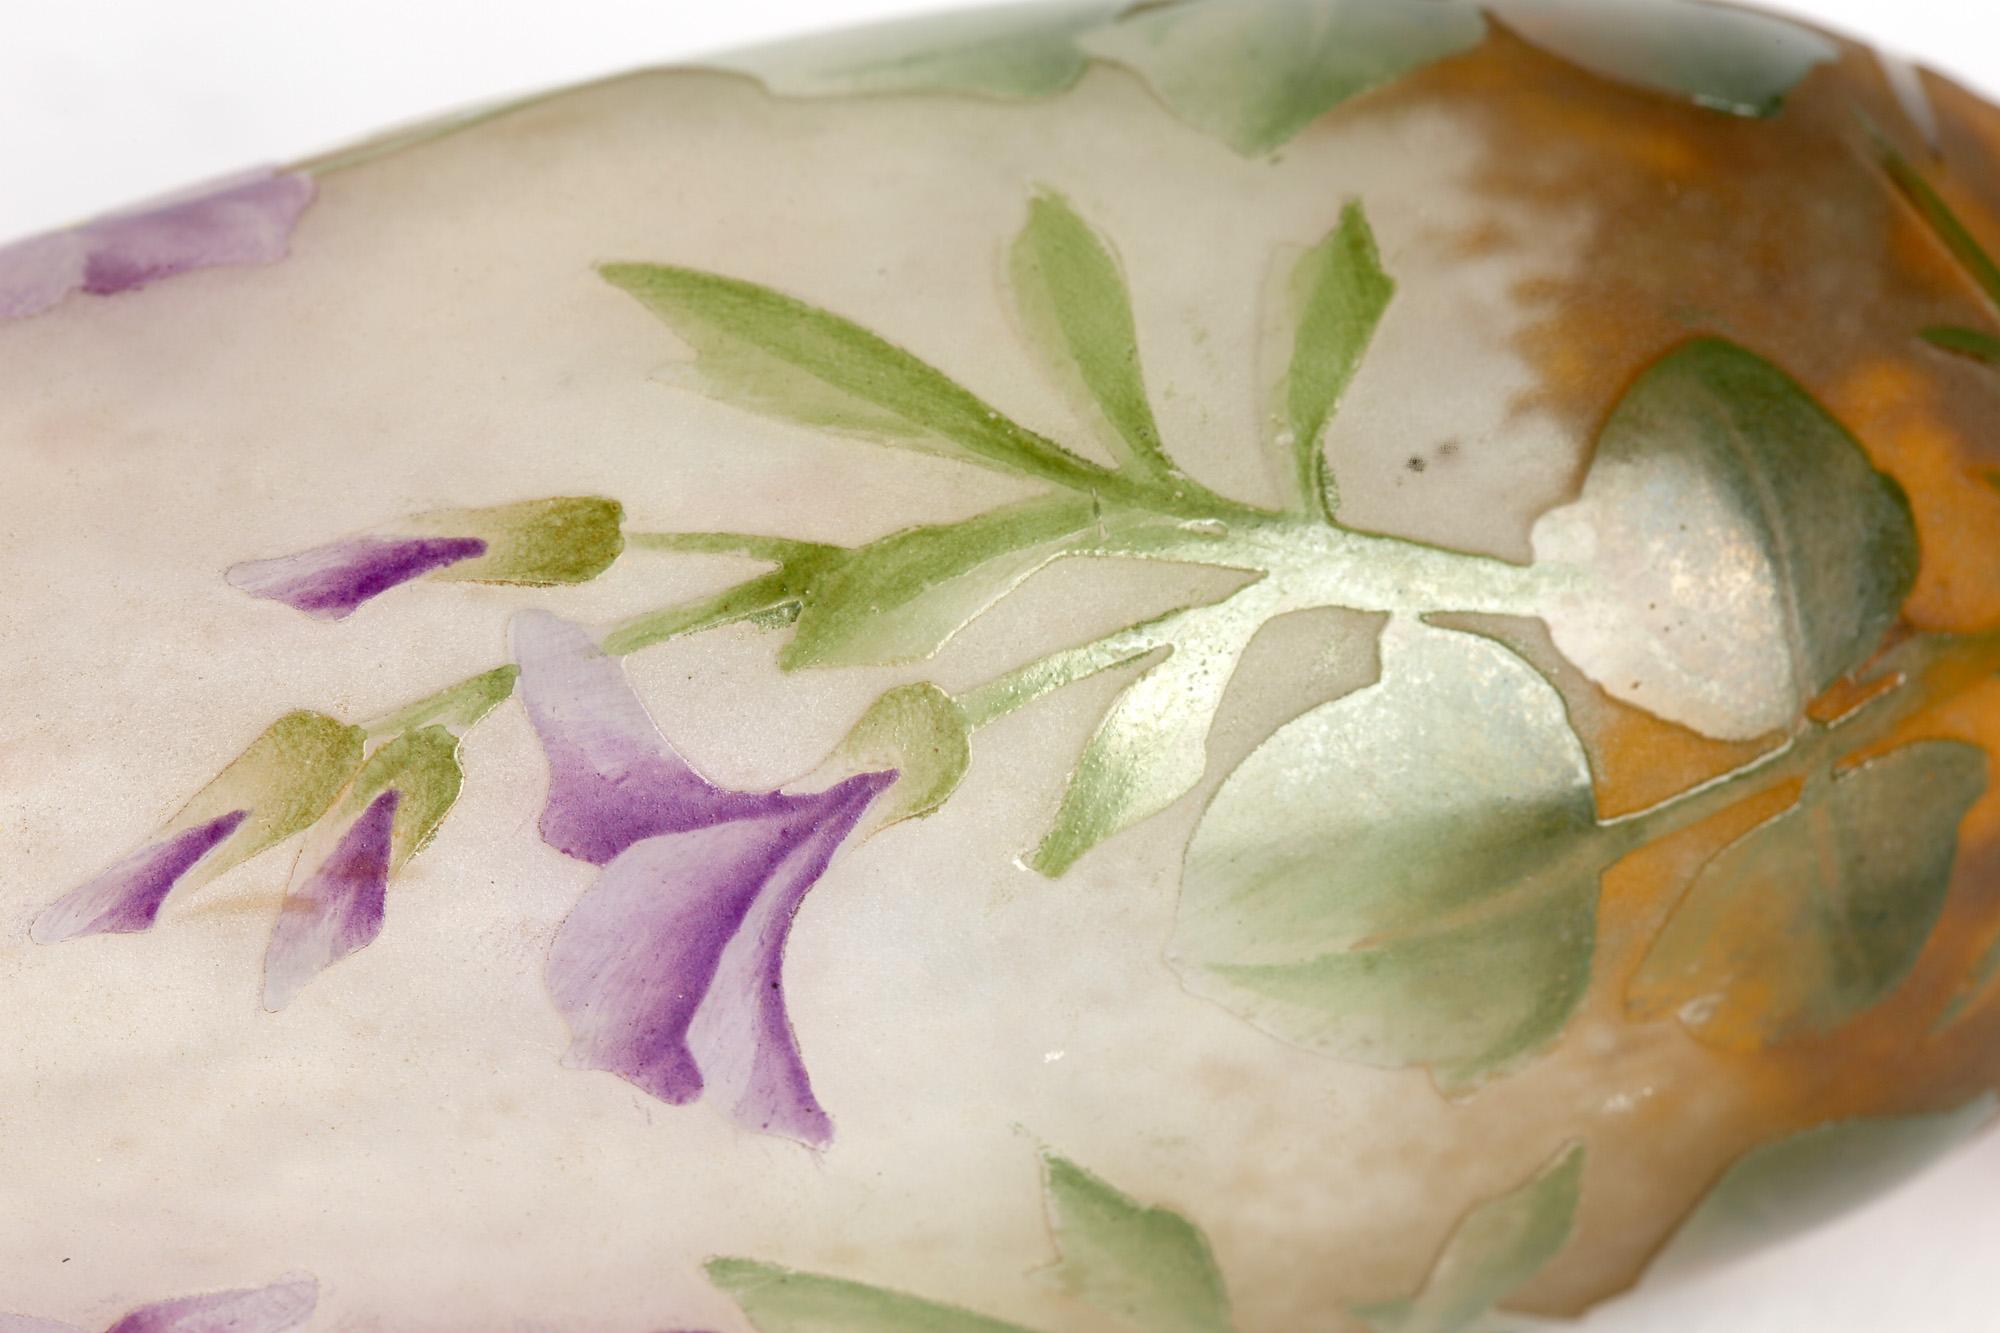 Daum Nancy French Art Nouveau Miniature Cameo Glass Vase with Violets For Sale 3